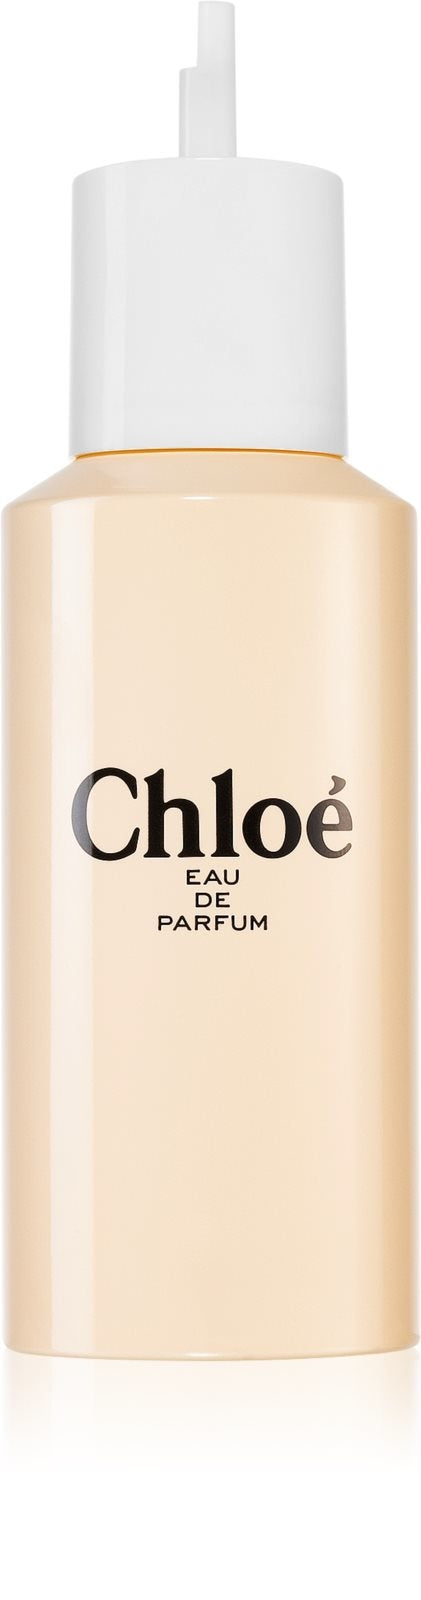 Chloe Eau de Parfum Refill